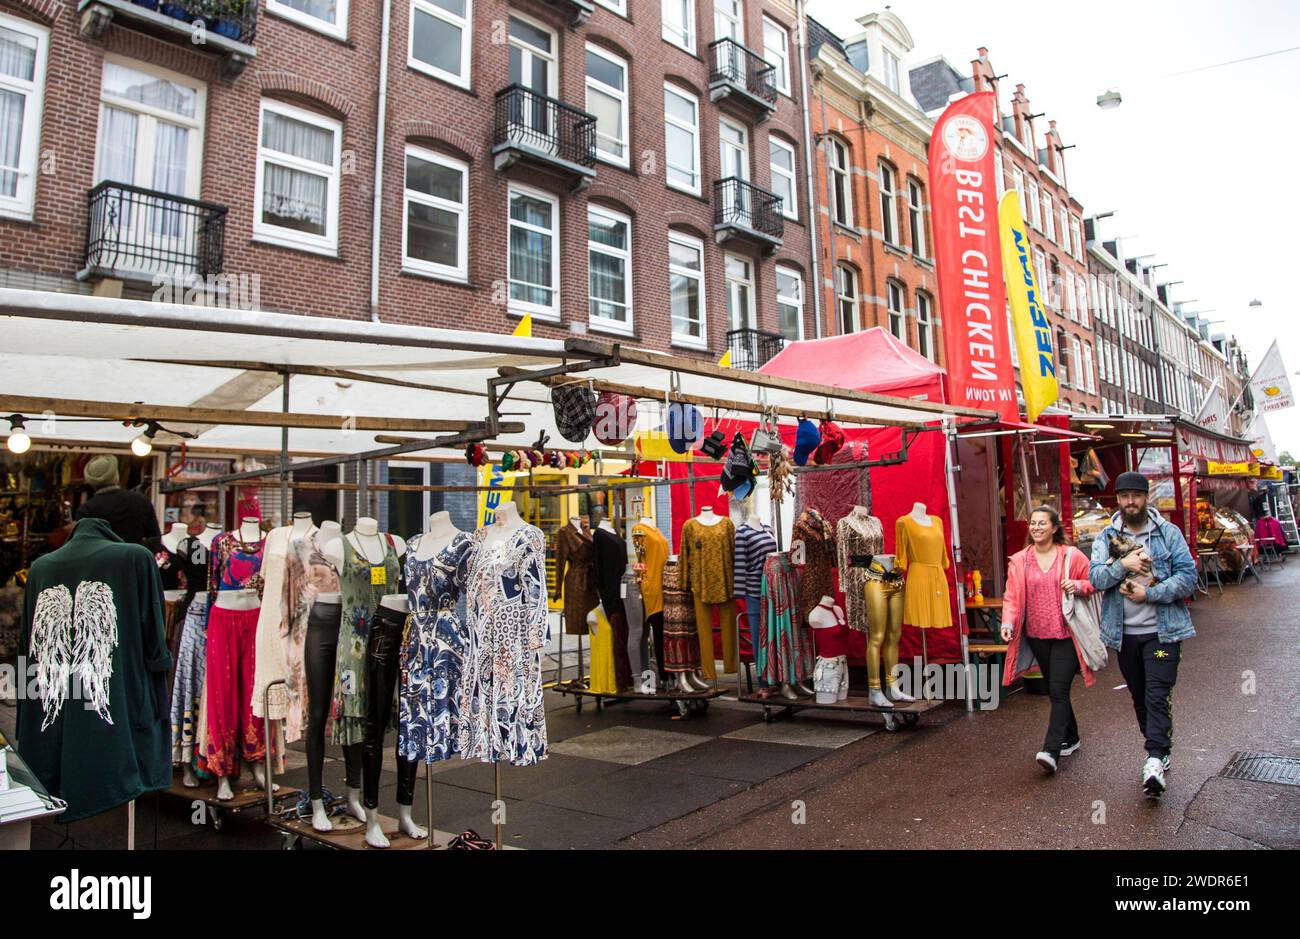 Amsterdam : marché Albert Cuyp Banque D'Images